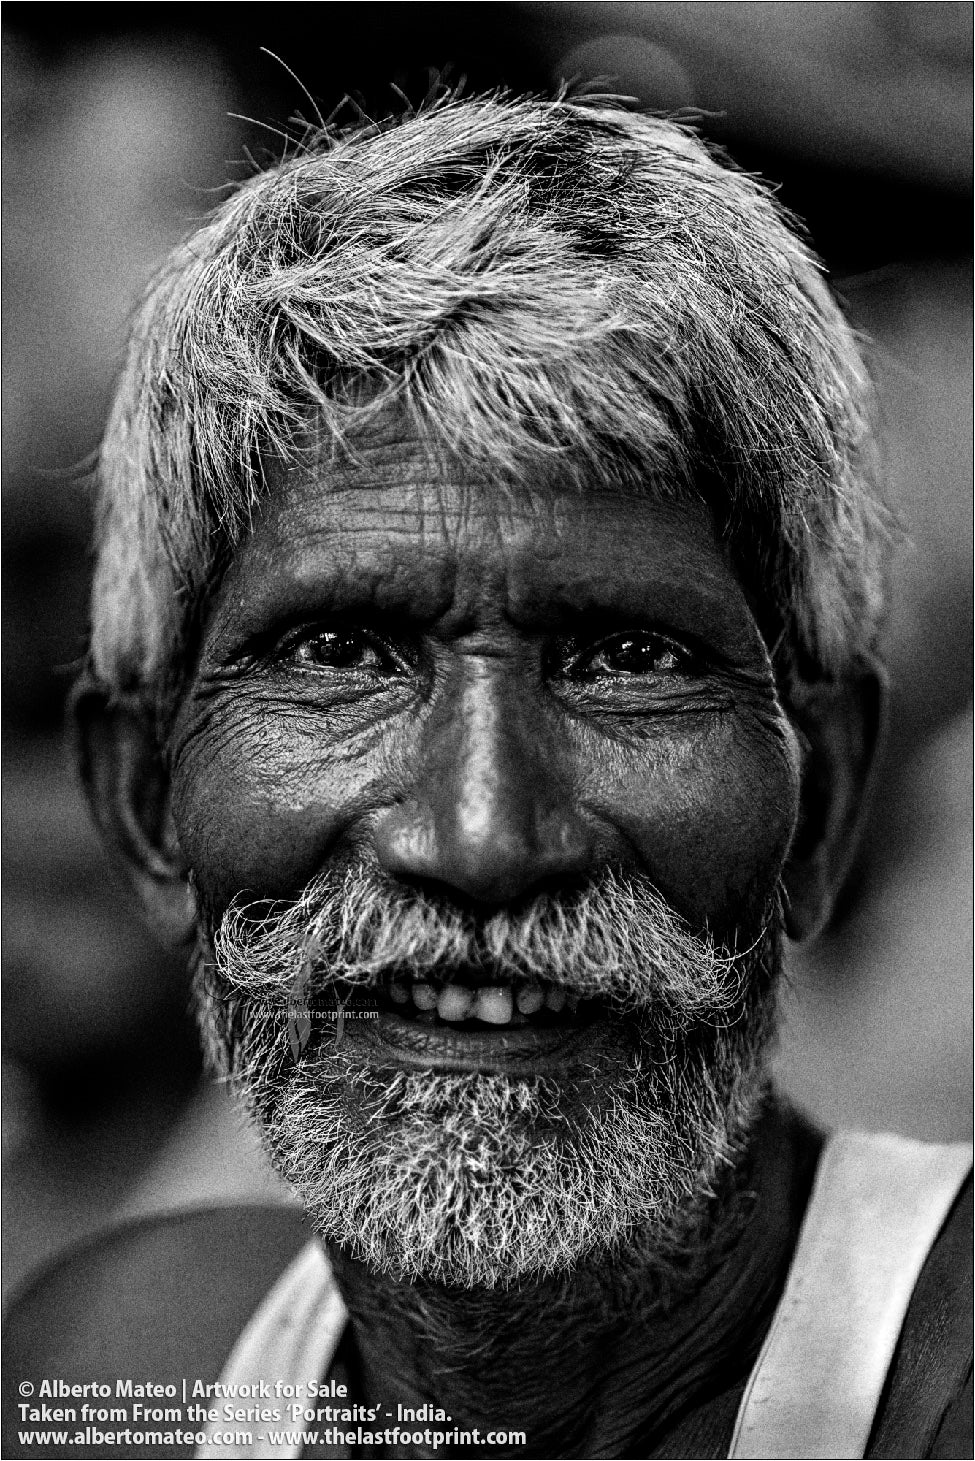 Smiling elderly Porter, Bara Bazar, Kolkata, India.